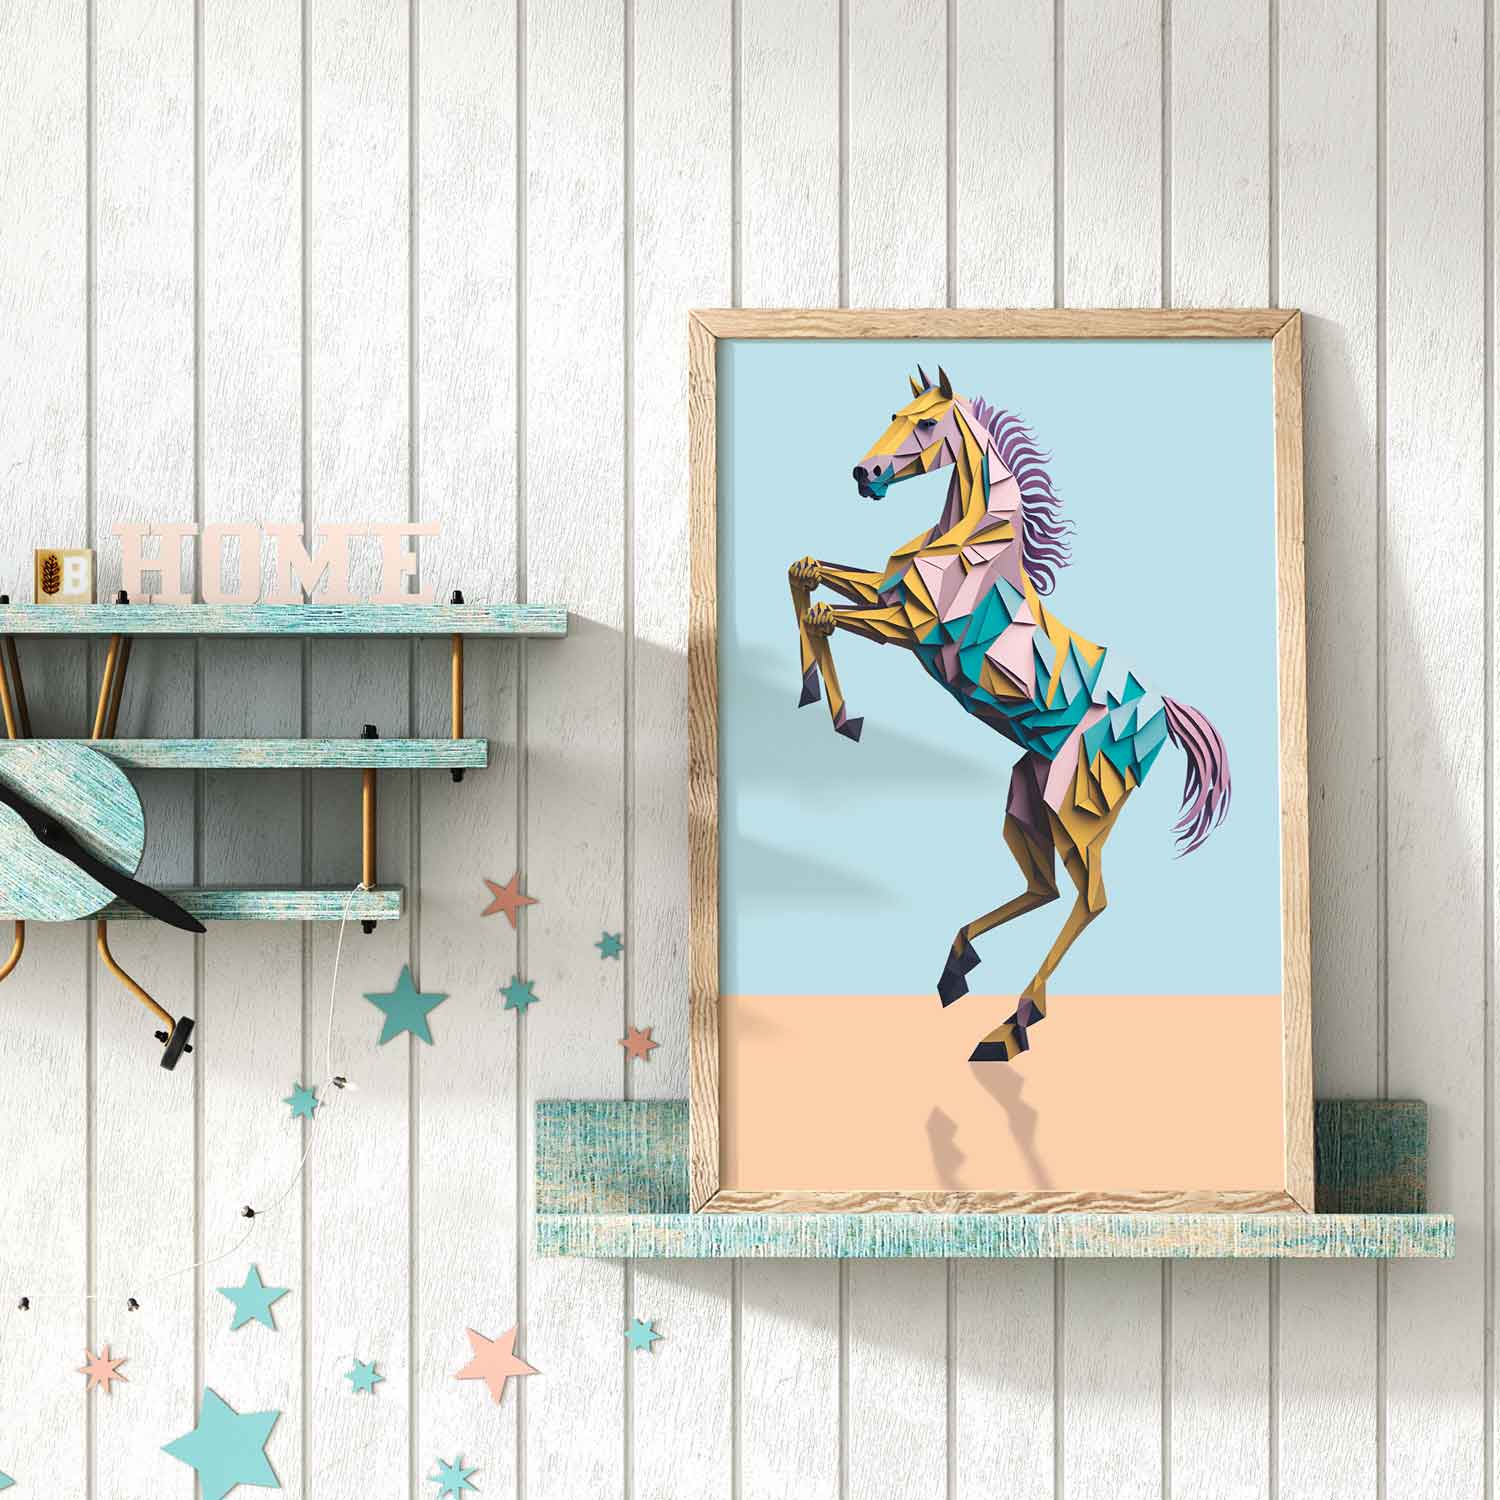 Neighing Horses - Digital Wall Art Set of 3